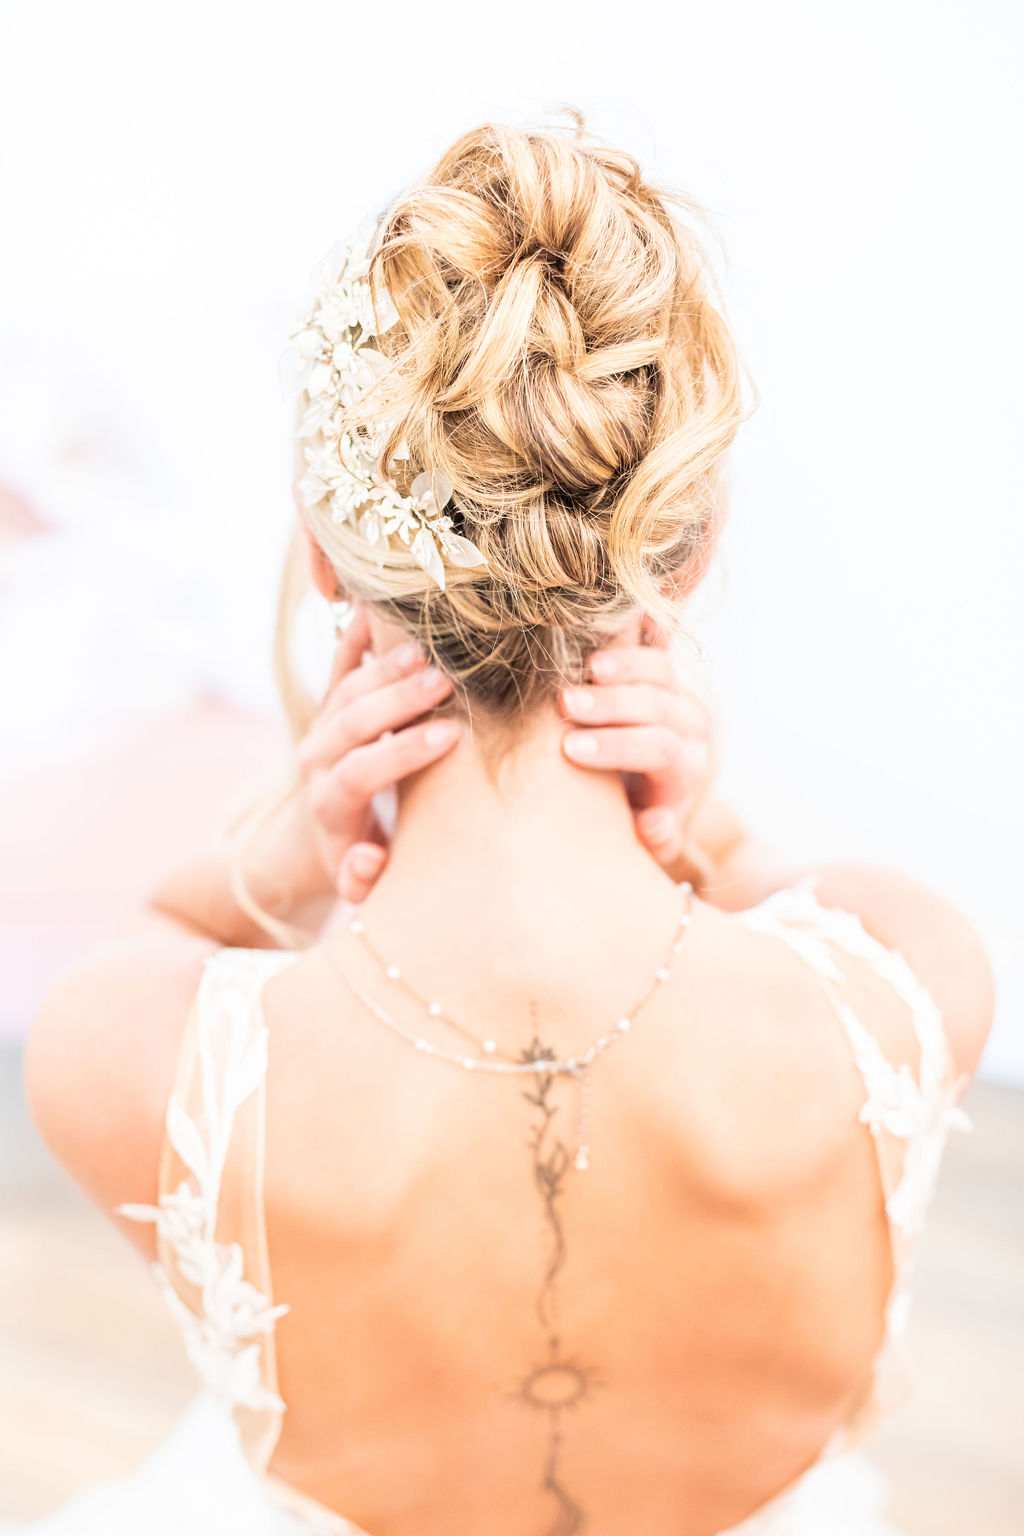 Niagara Bridal Wedding Hair and Makeup